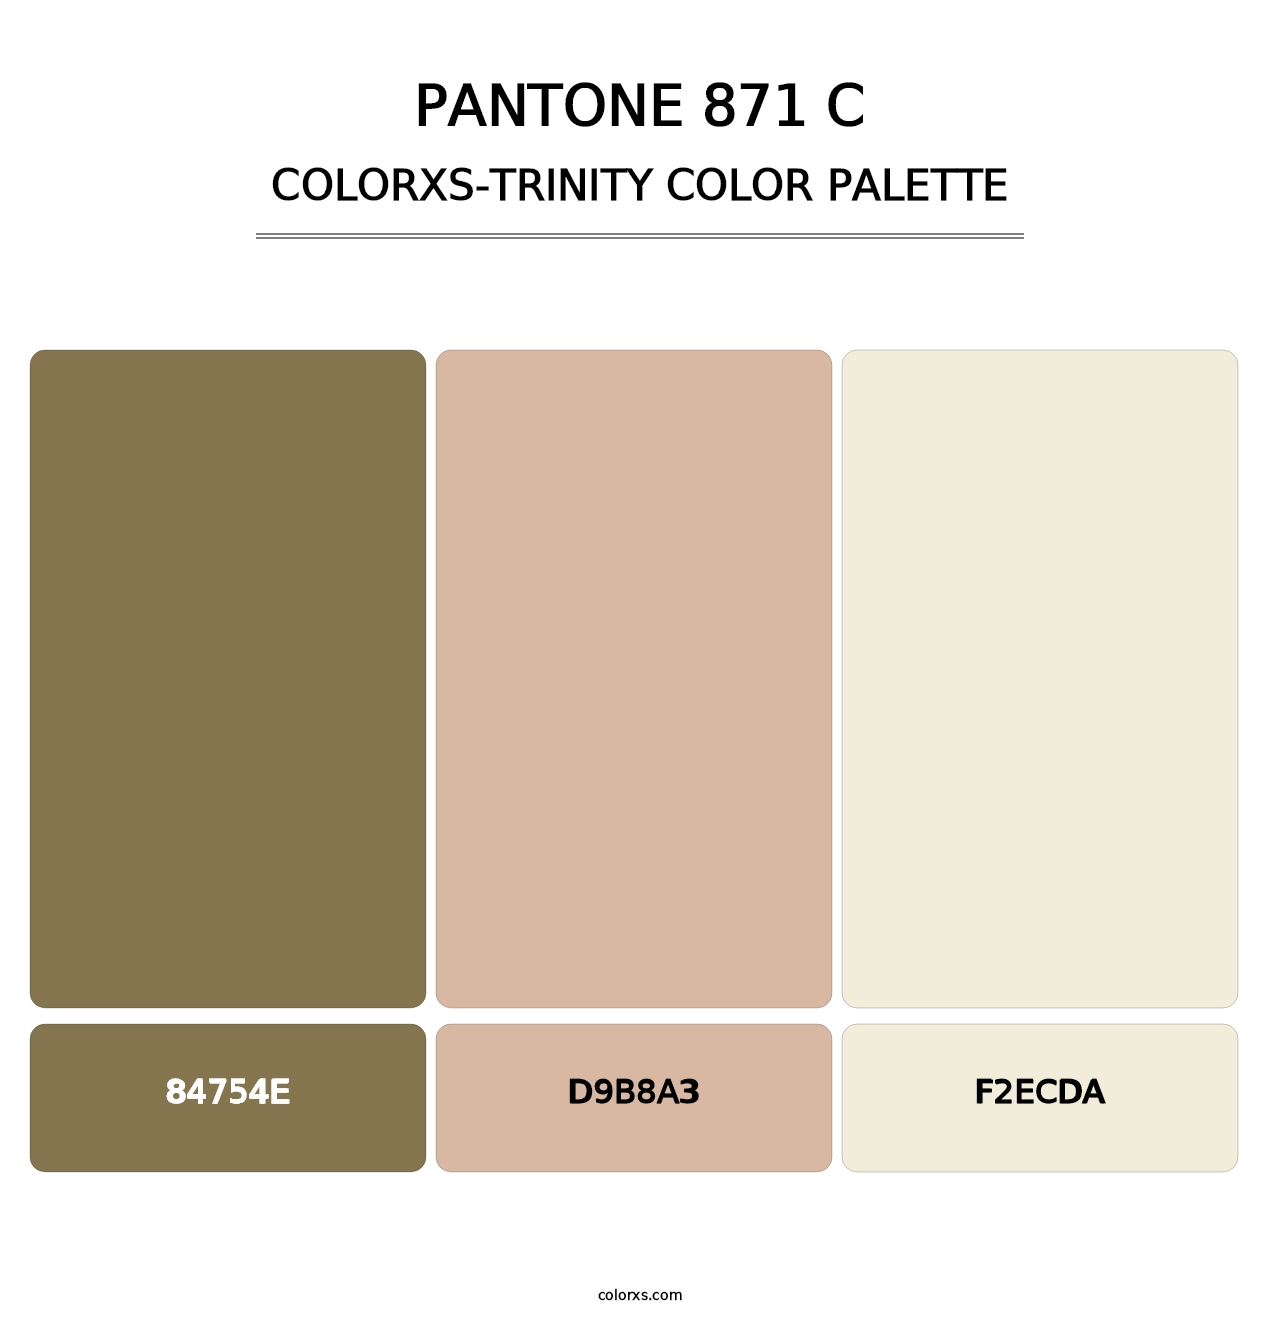 PANTONE 871 C - Colorxs Trinity Palette